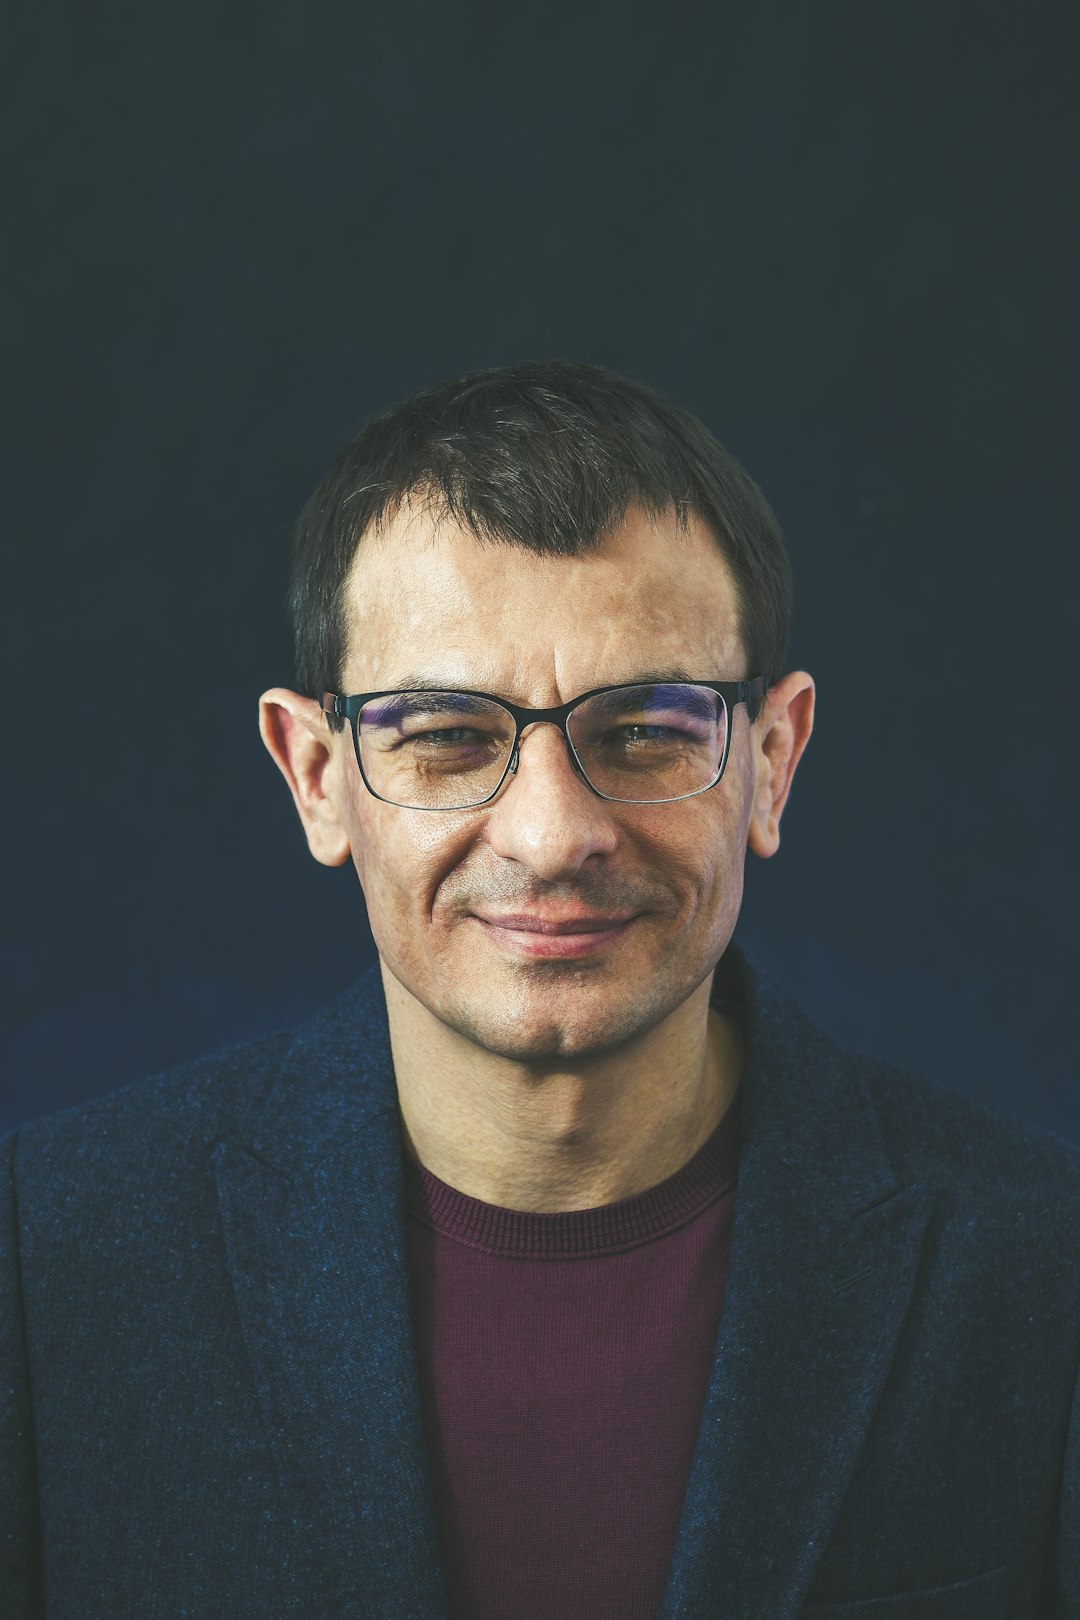 Portrait of man in glasses (scientist)